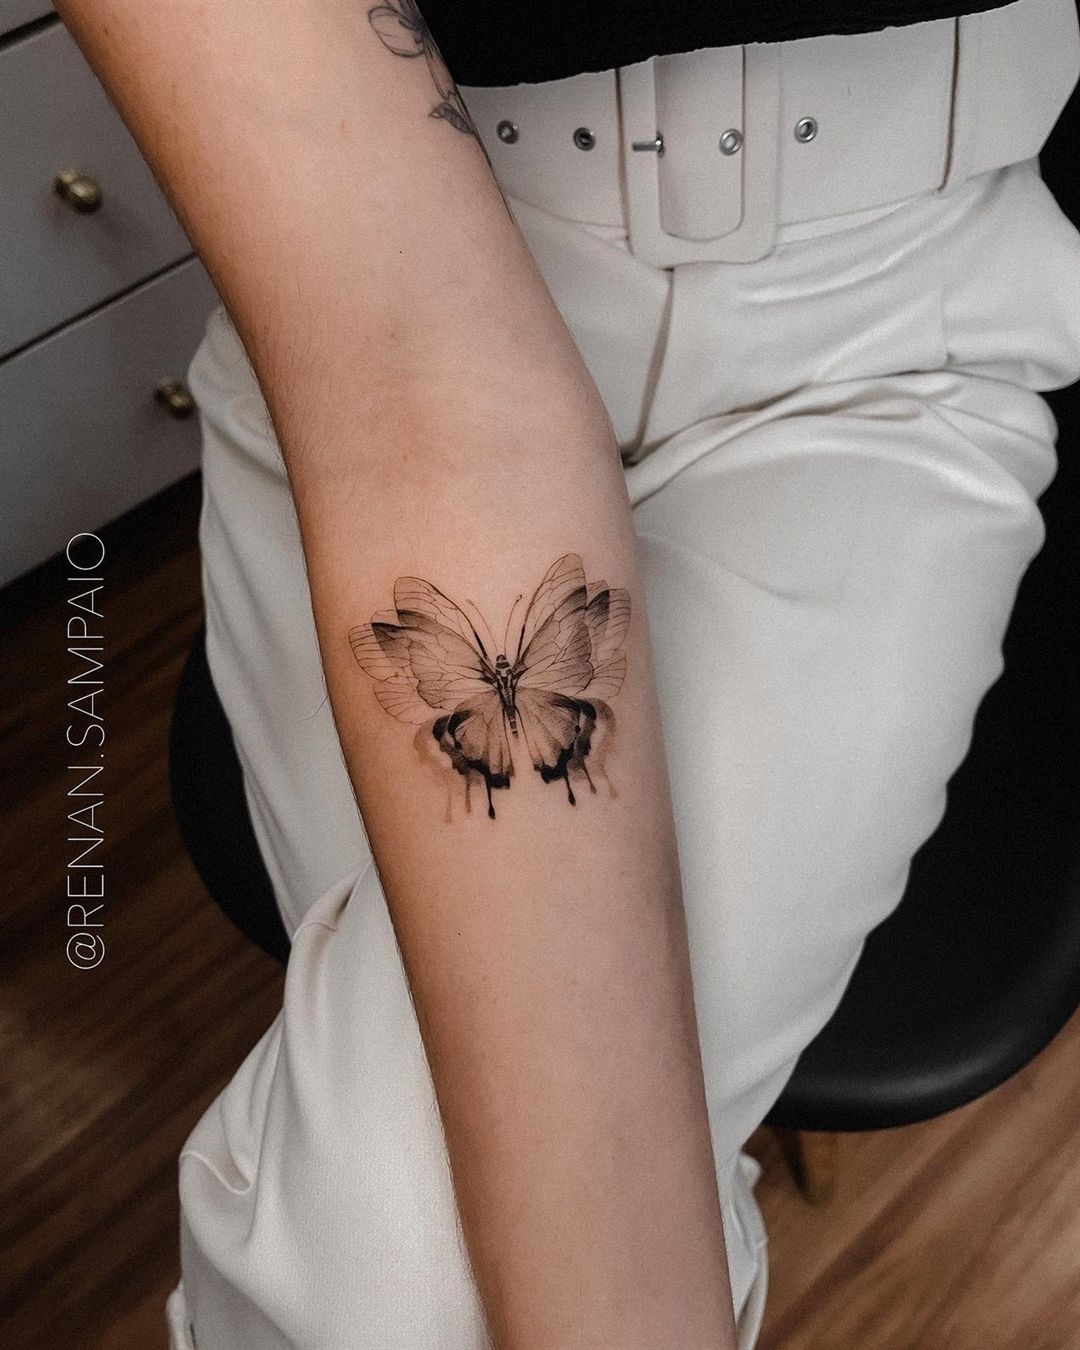 tattoosnovas/instagram